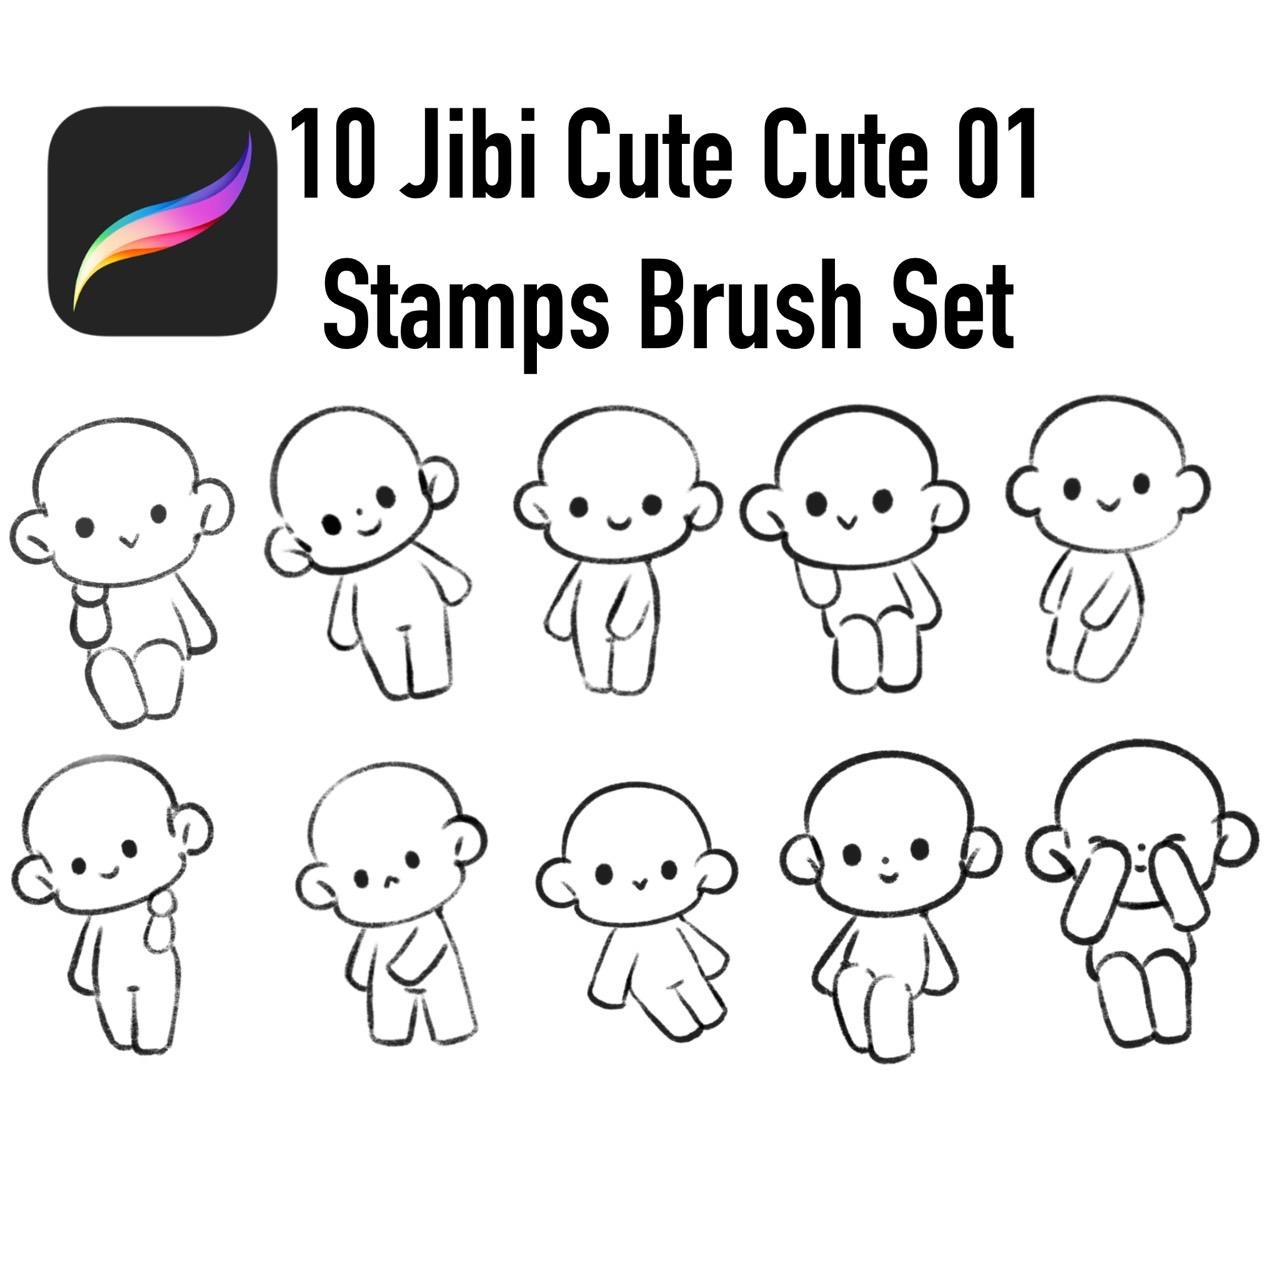 10 Jibi Cuie Cute 01 Stamps Brush Set